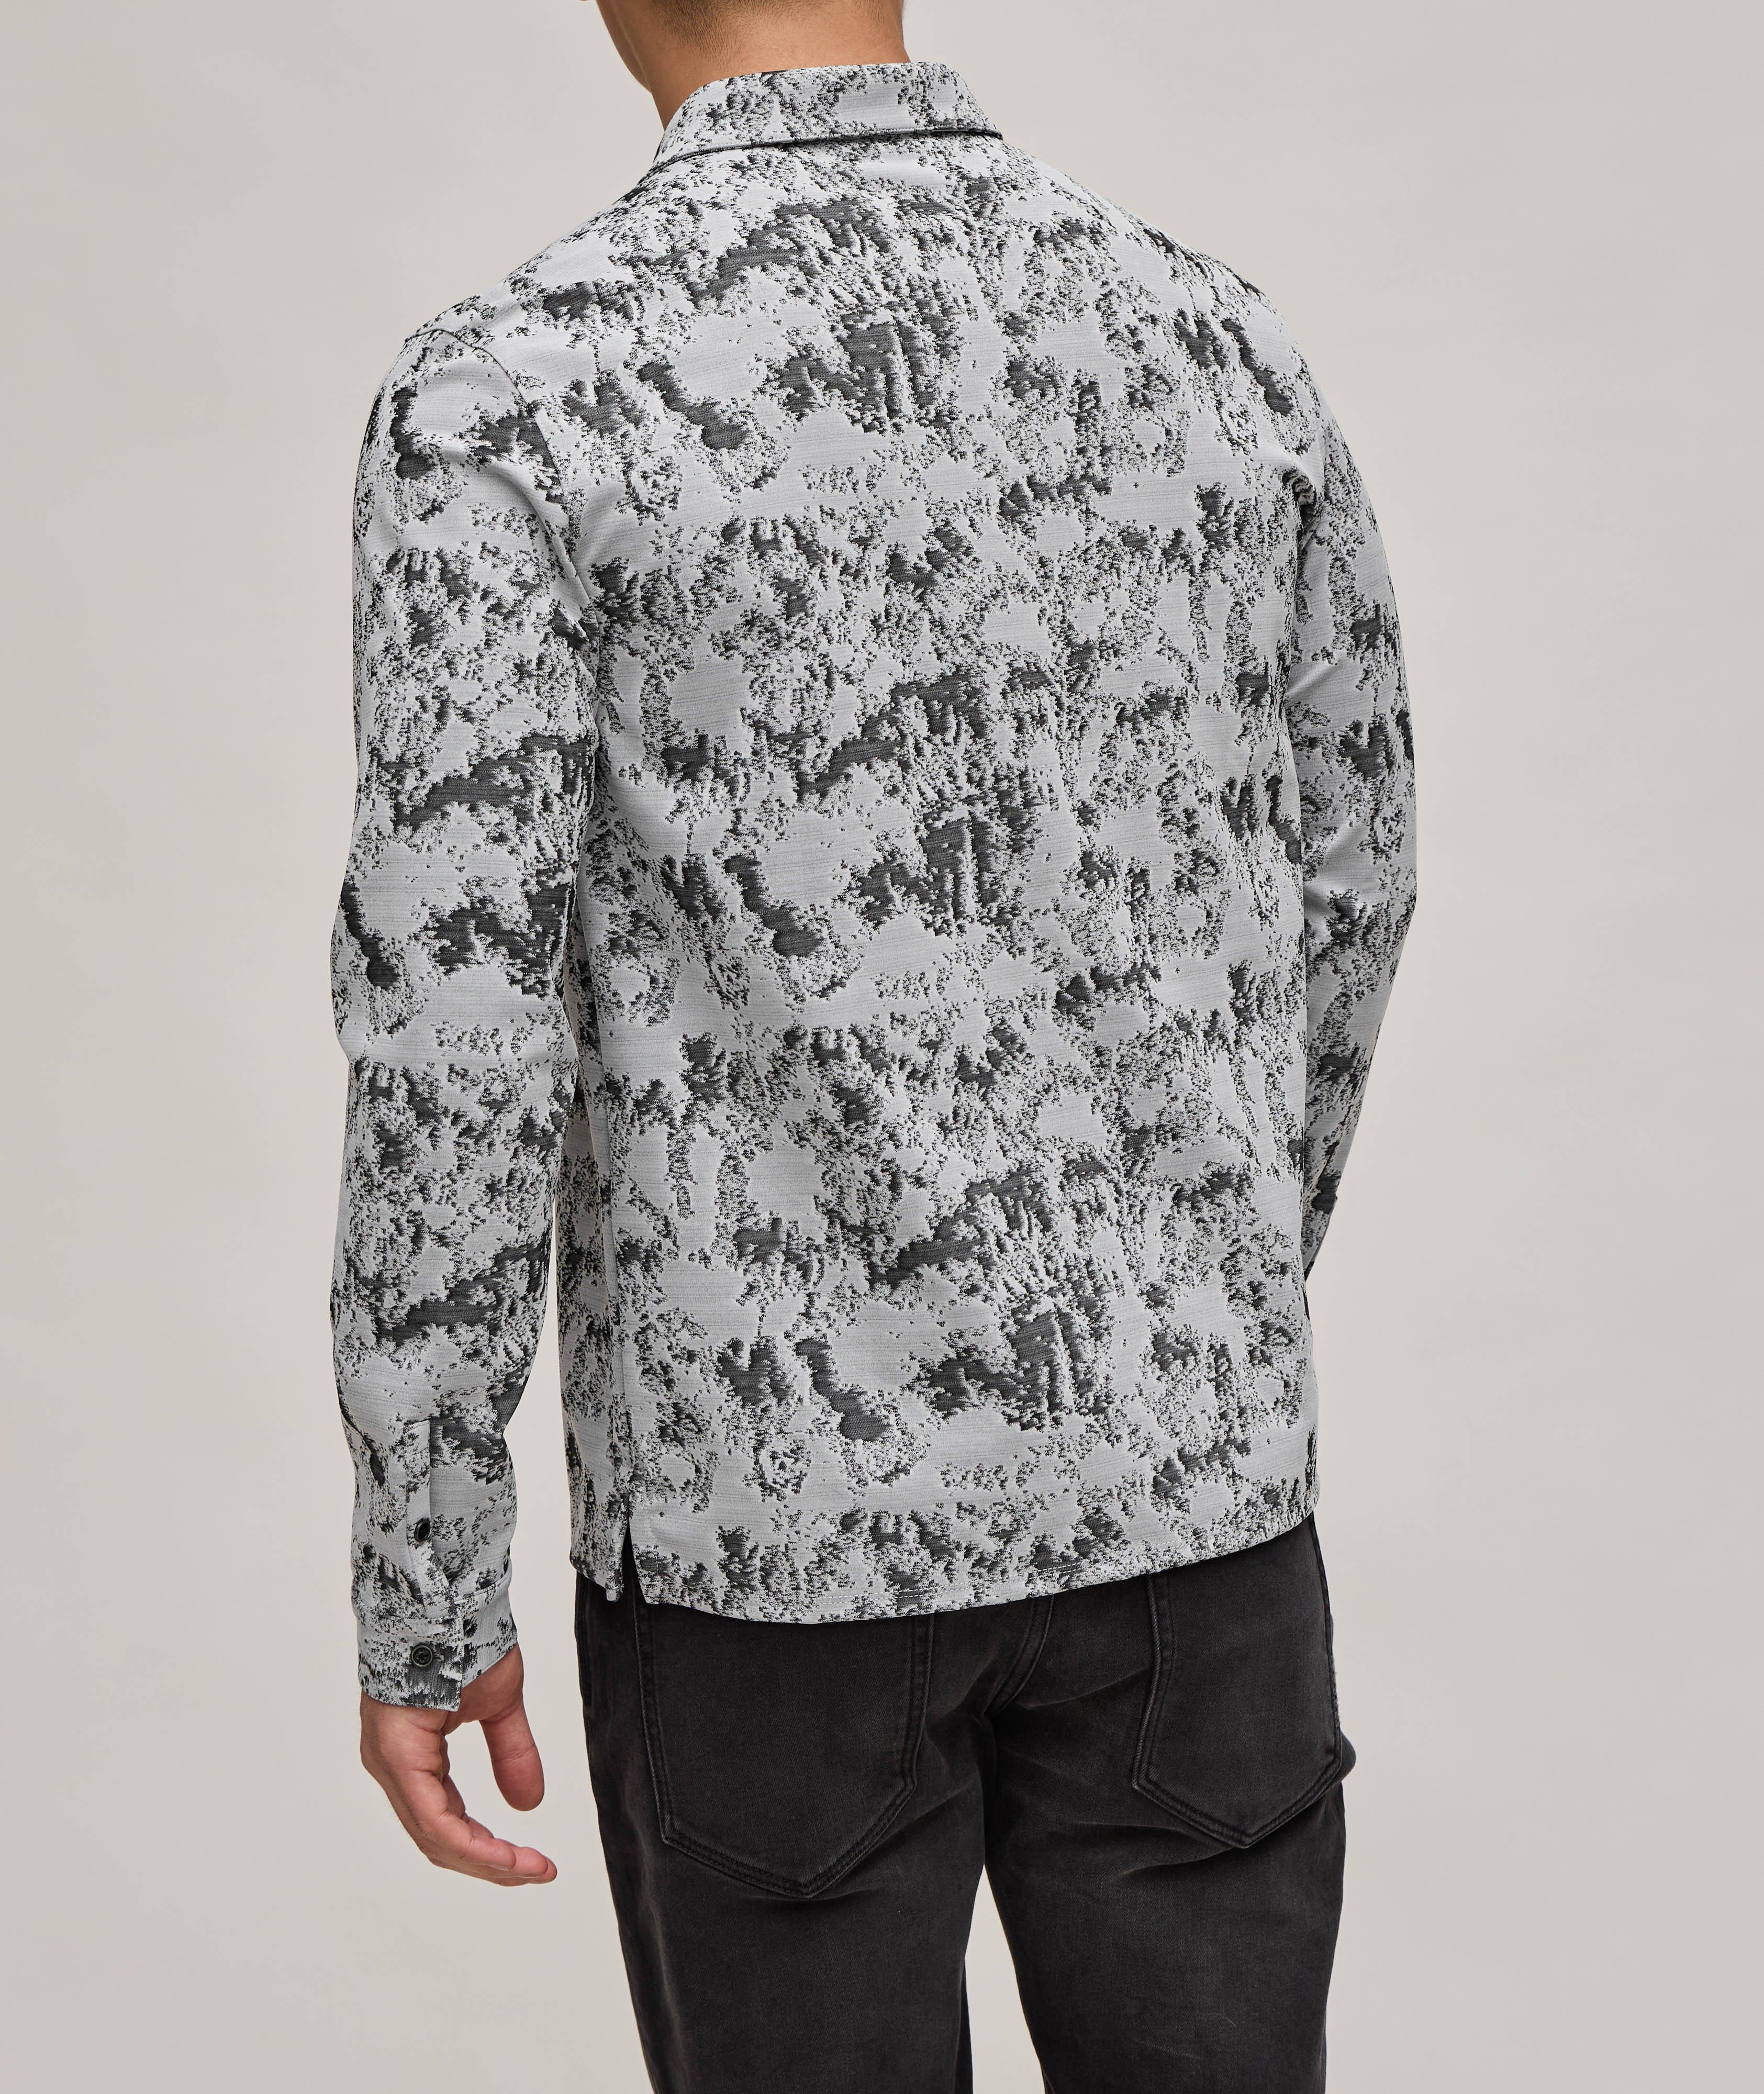 Distressed Print Stretch-Fabric Sport Shirt  image 2